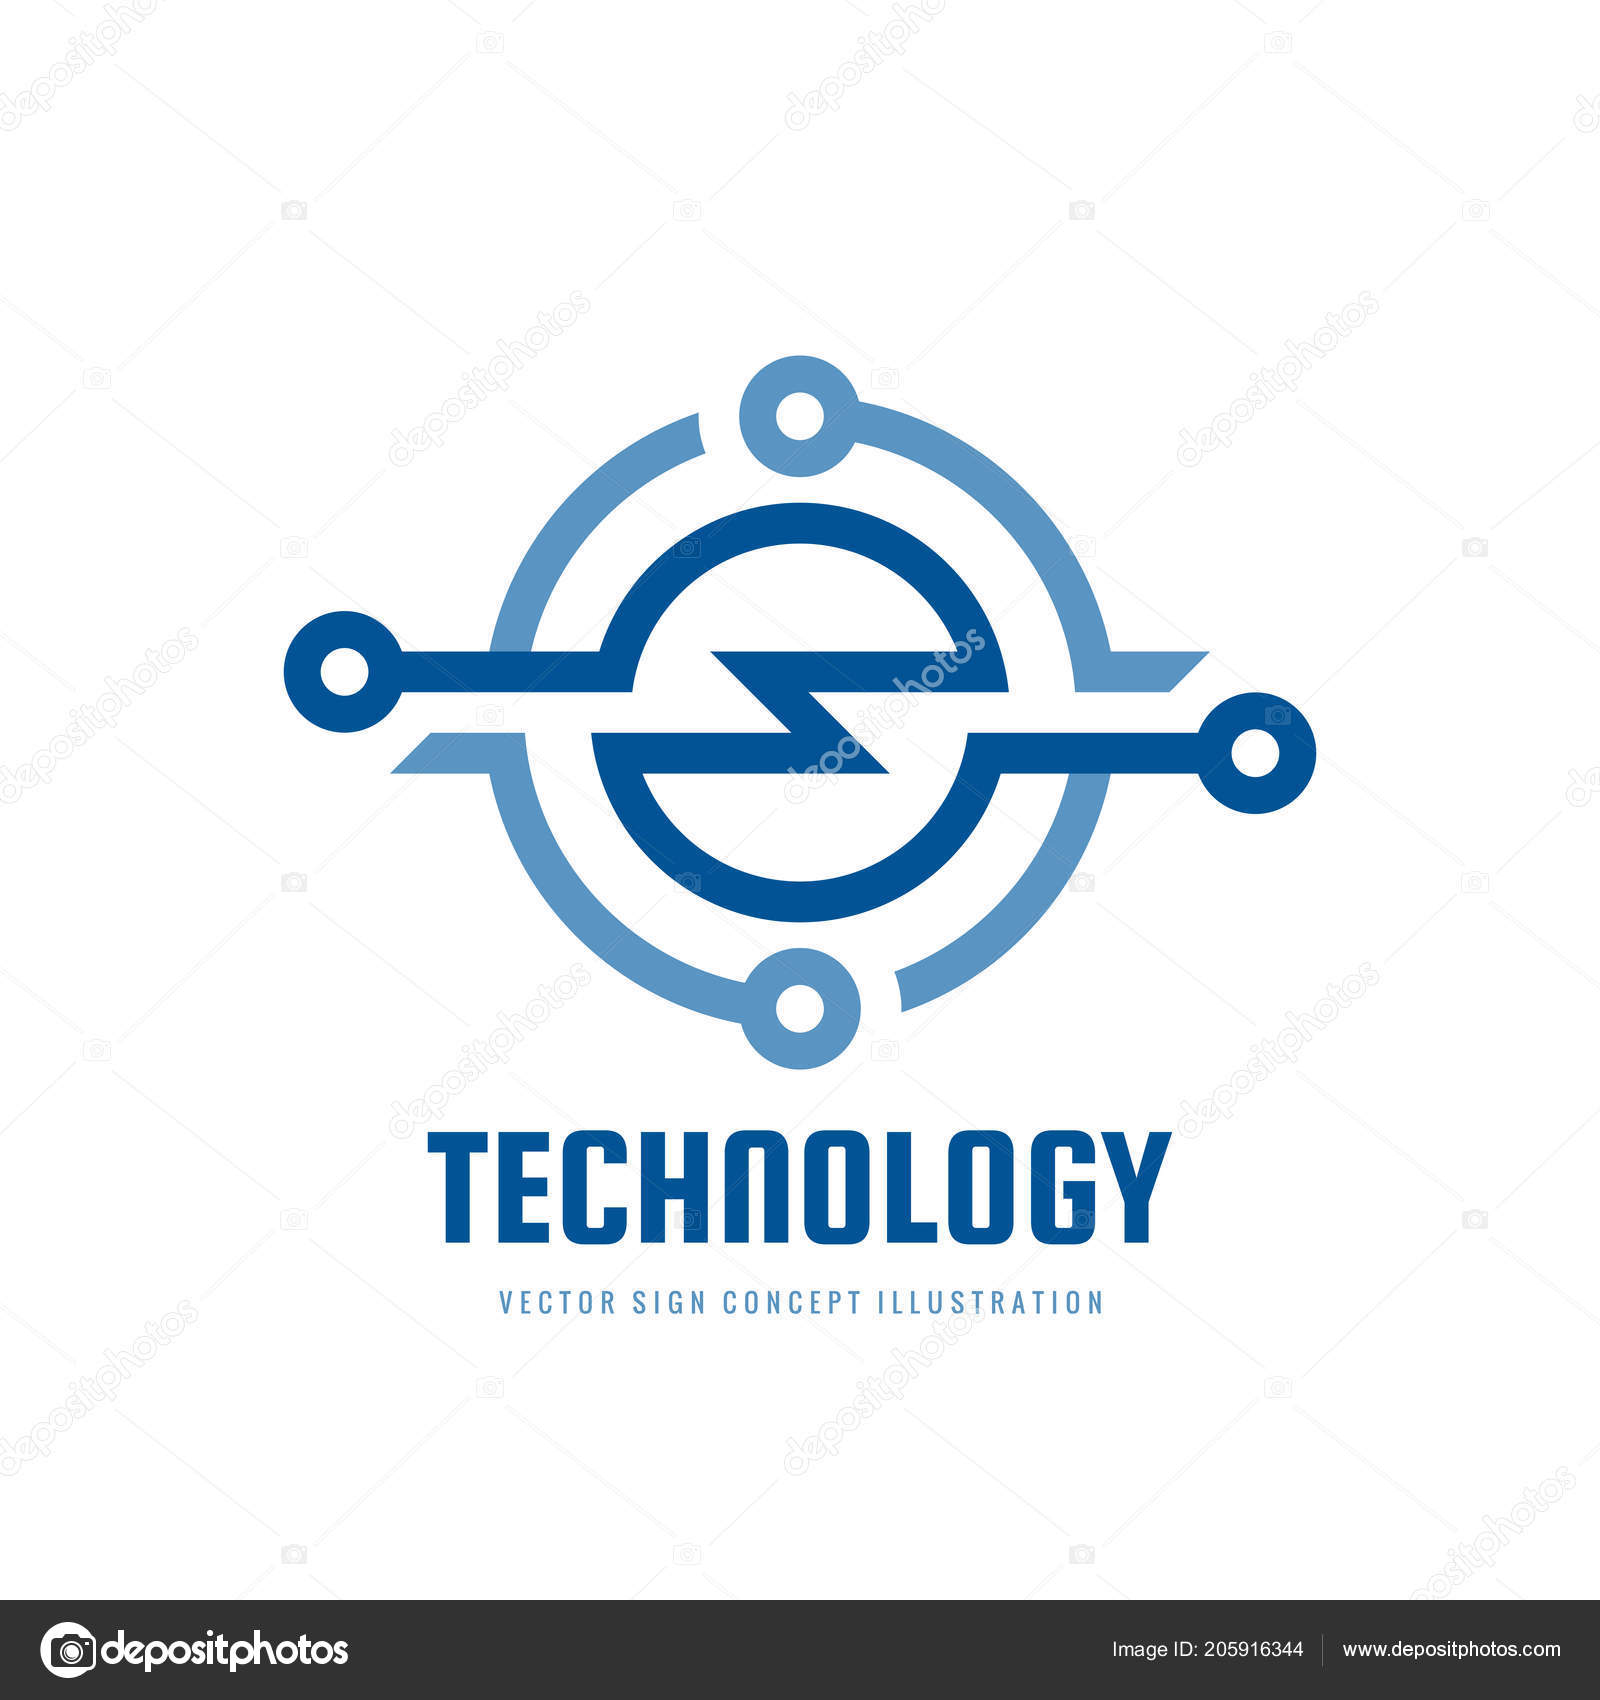 Technology Vector Business Logo Template Concept Illustration